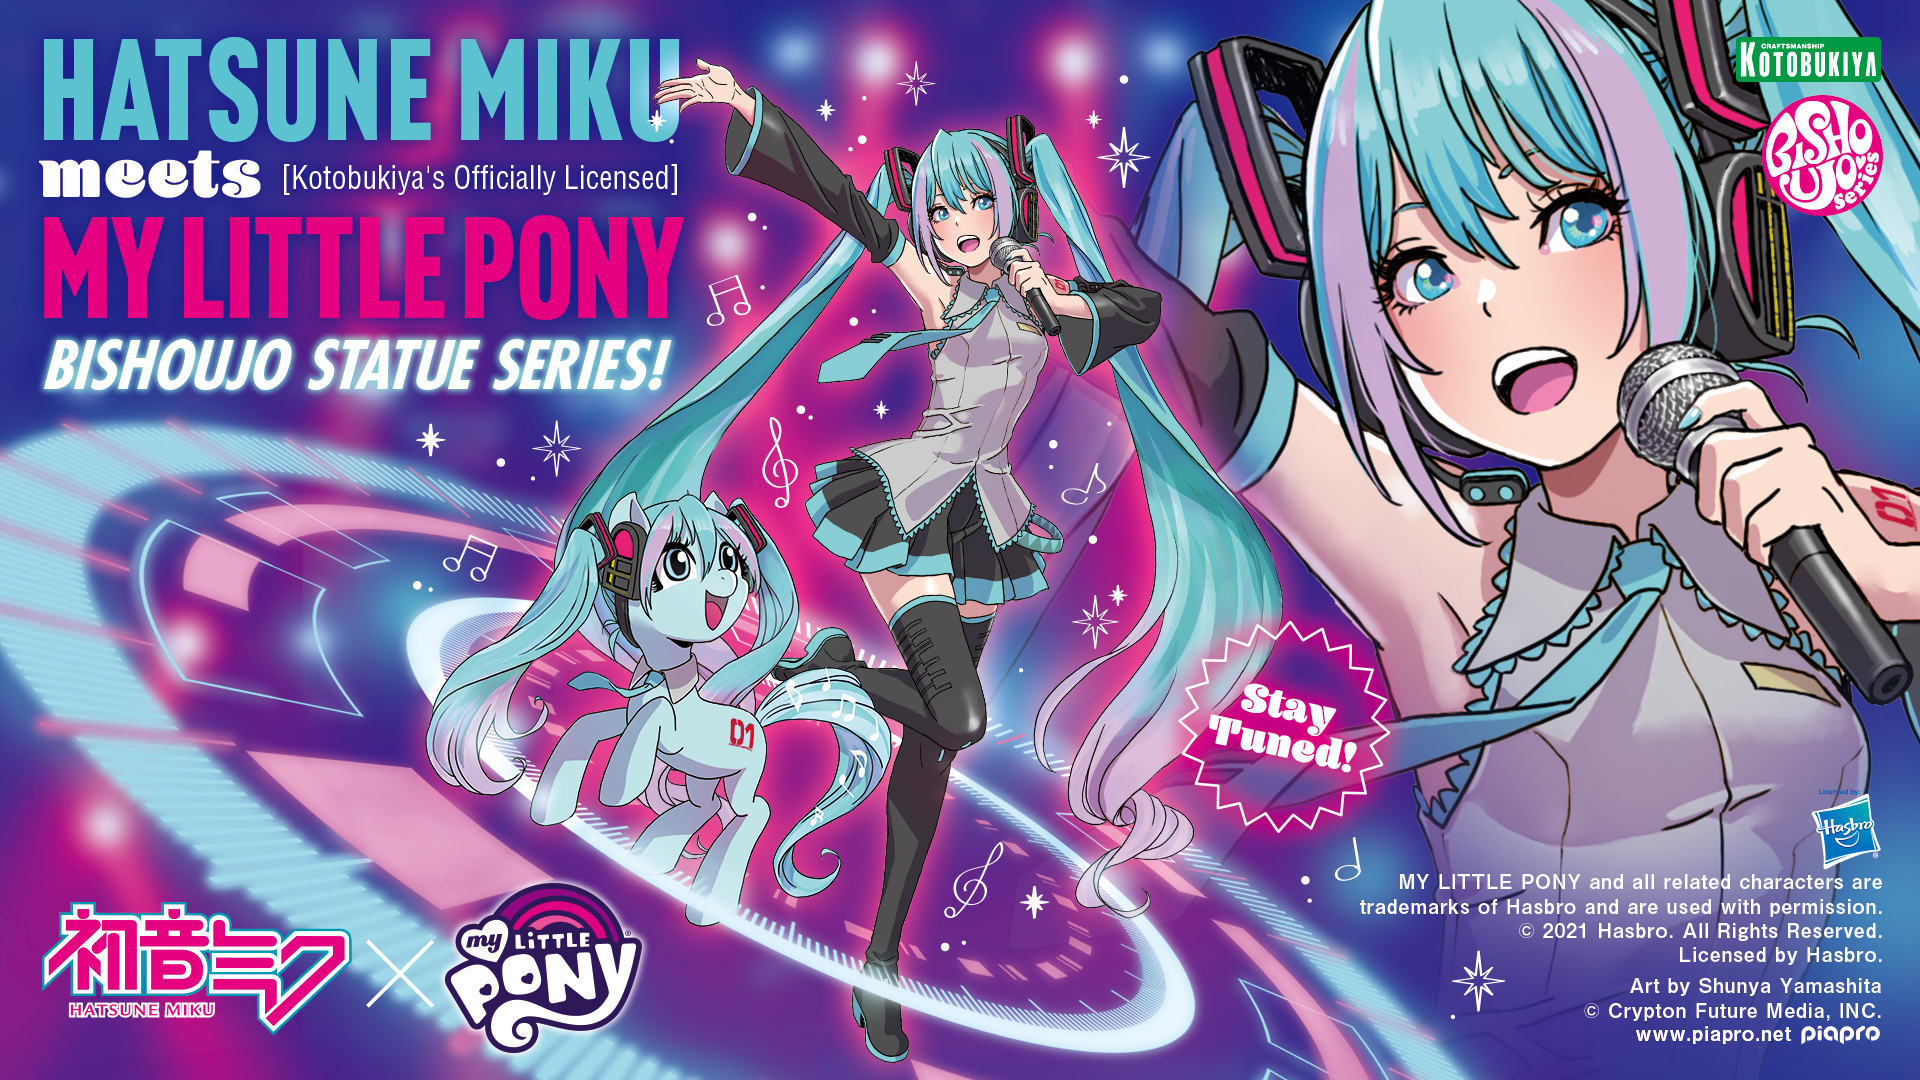 My Little Pony Bishoujo Series: Hatsune Miku